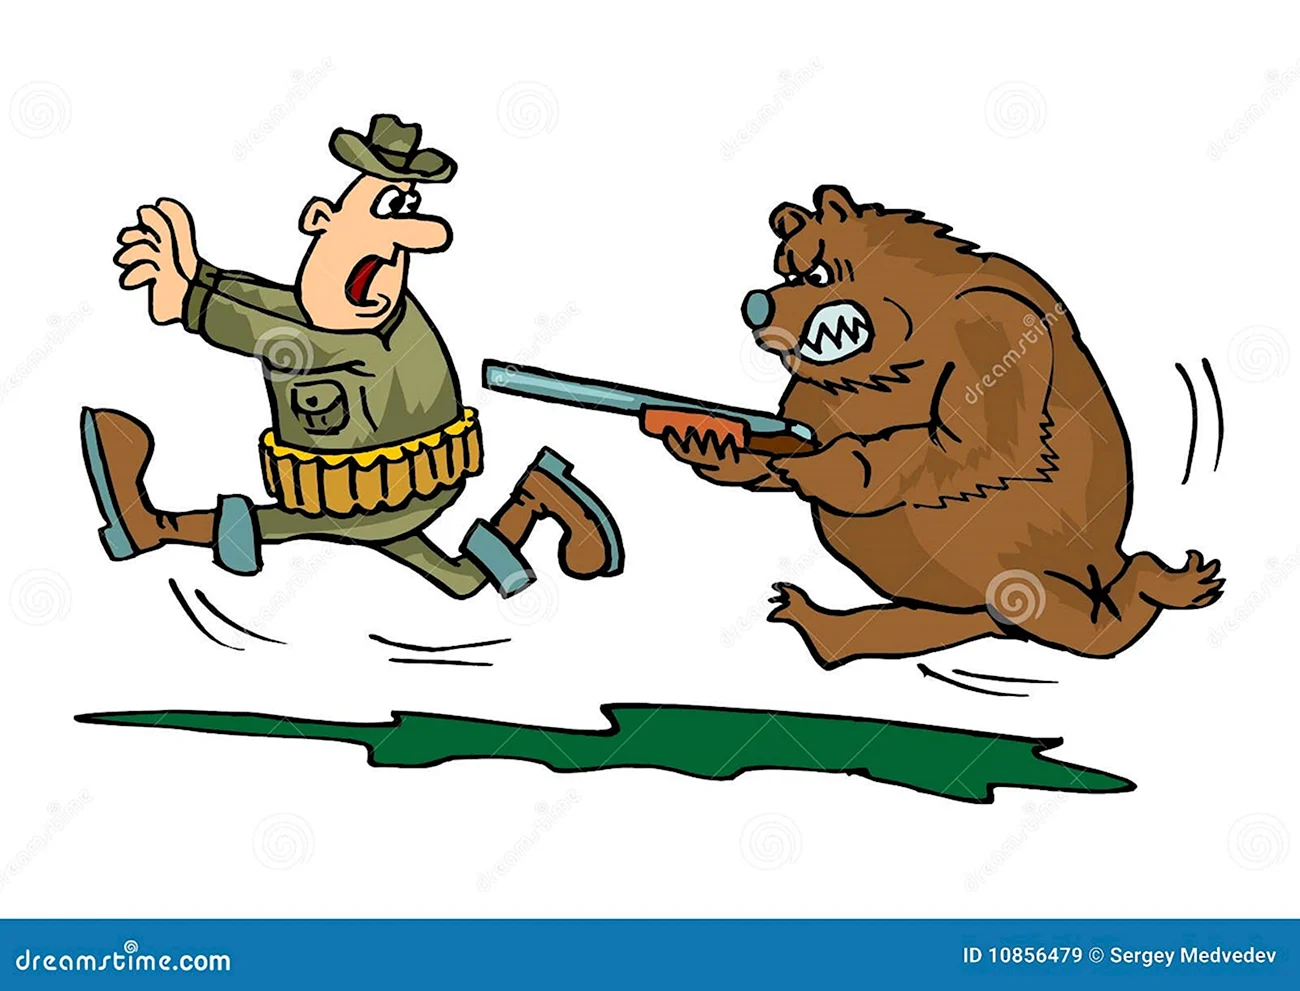 Карикатура медведь и охотник. Картинка